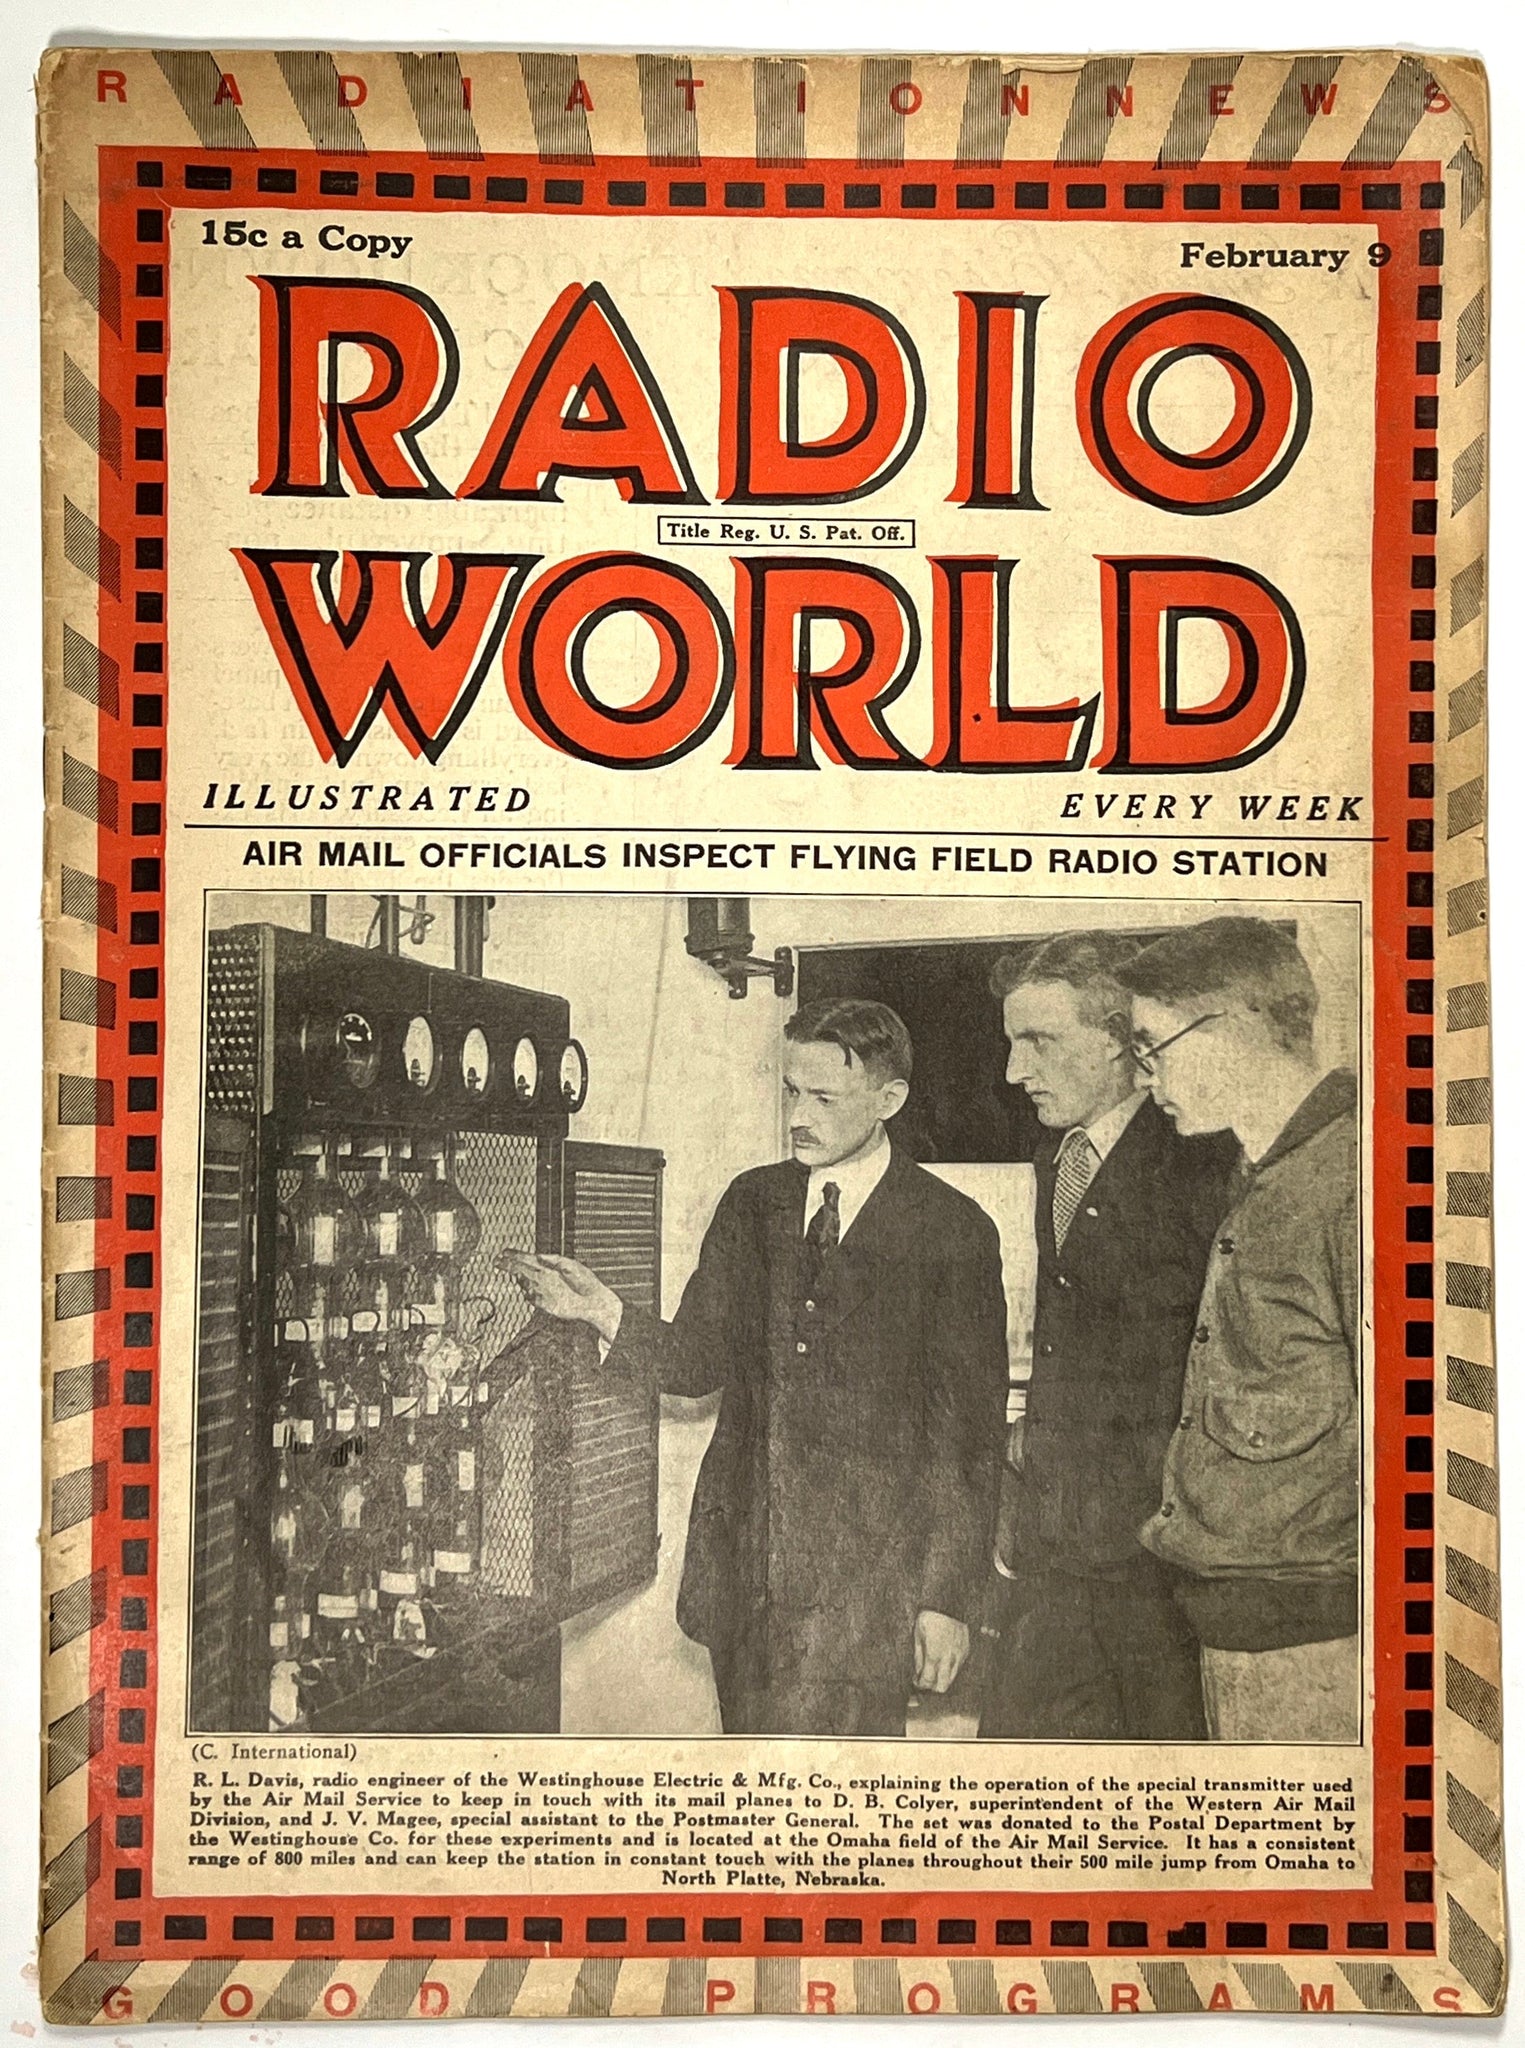 Radio World - Volume Four (Vol. IV, No. 20. Whole No. 98. February 9, 1924)